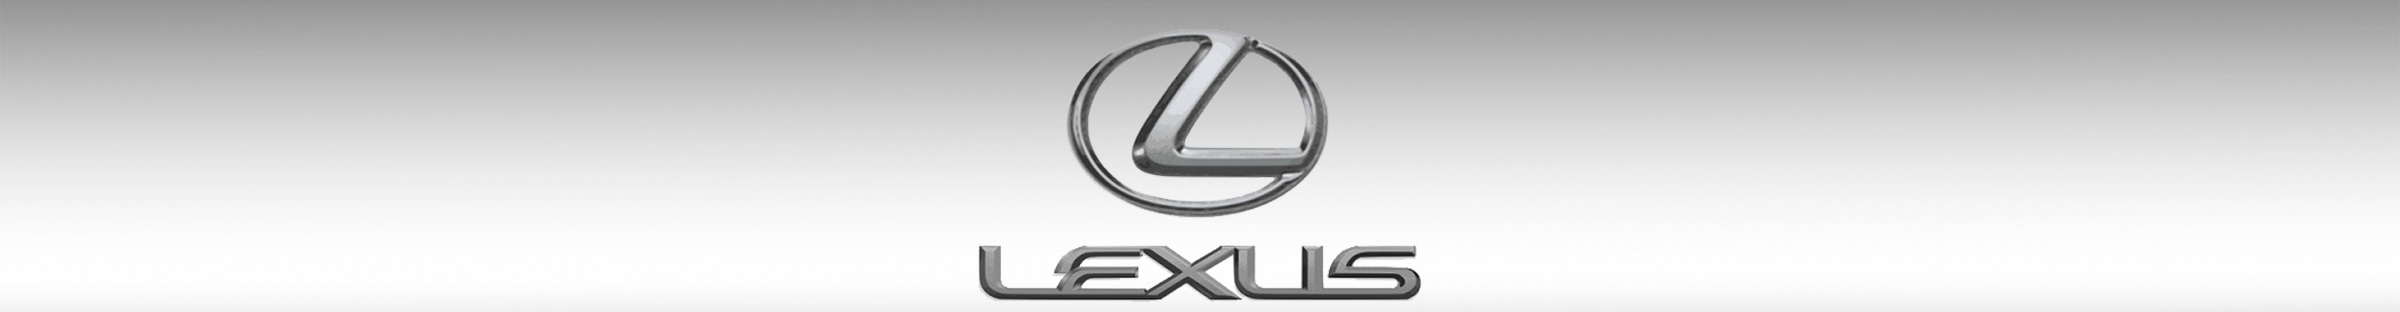 Lexus at the Sac Auto show